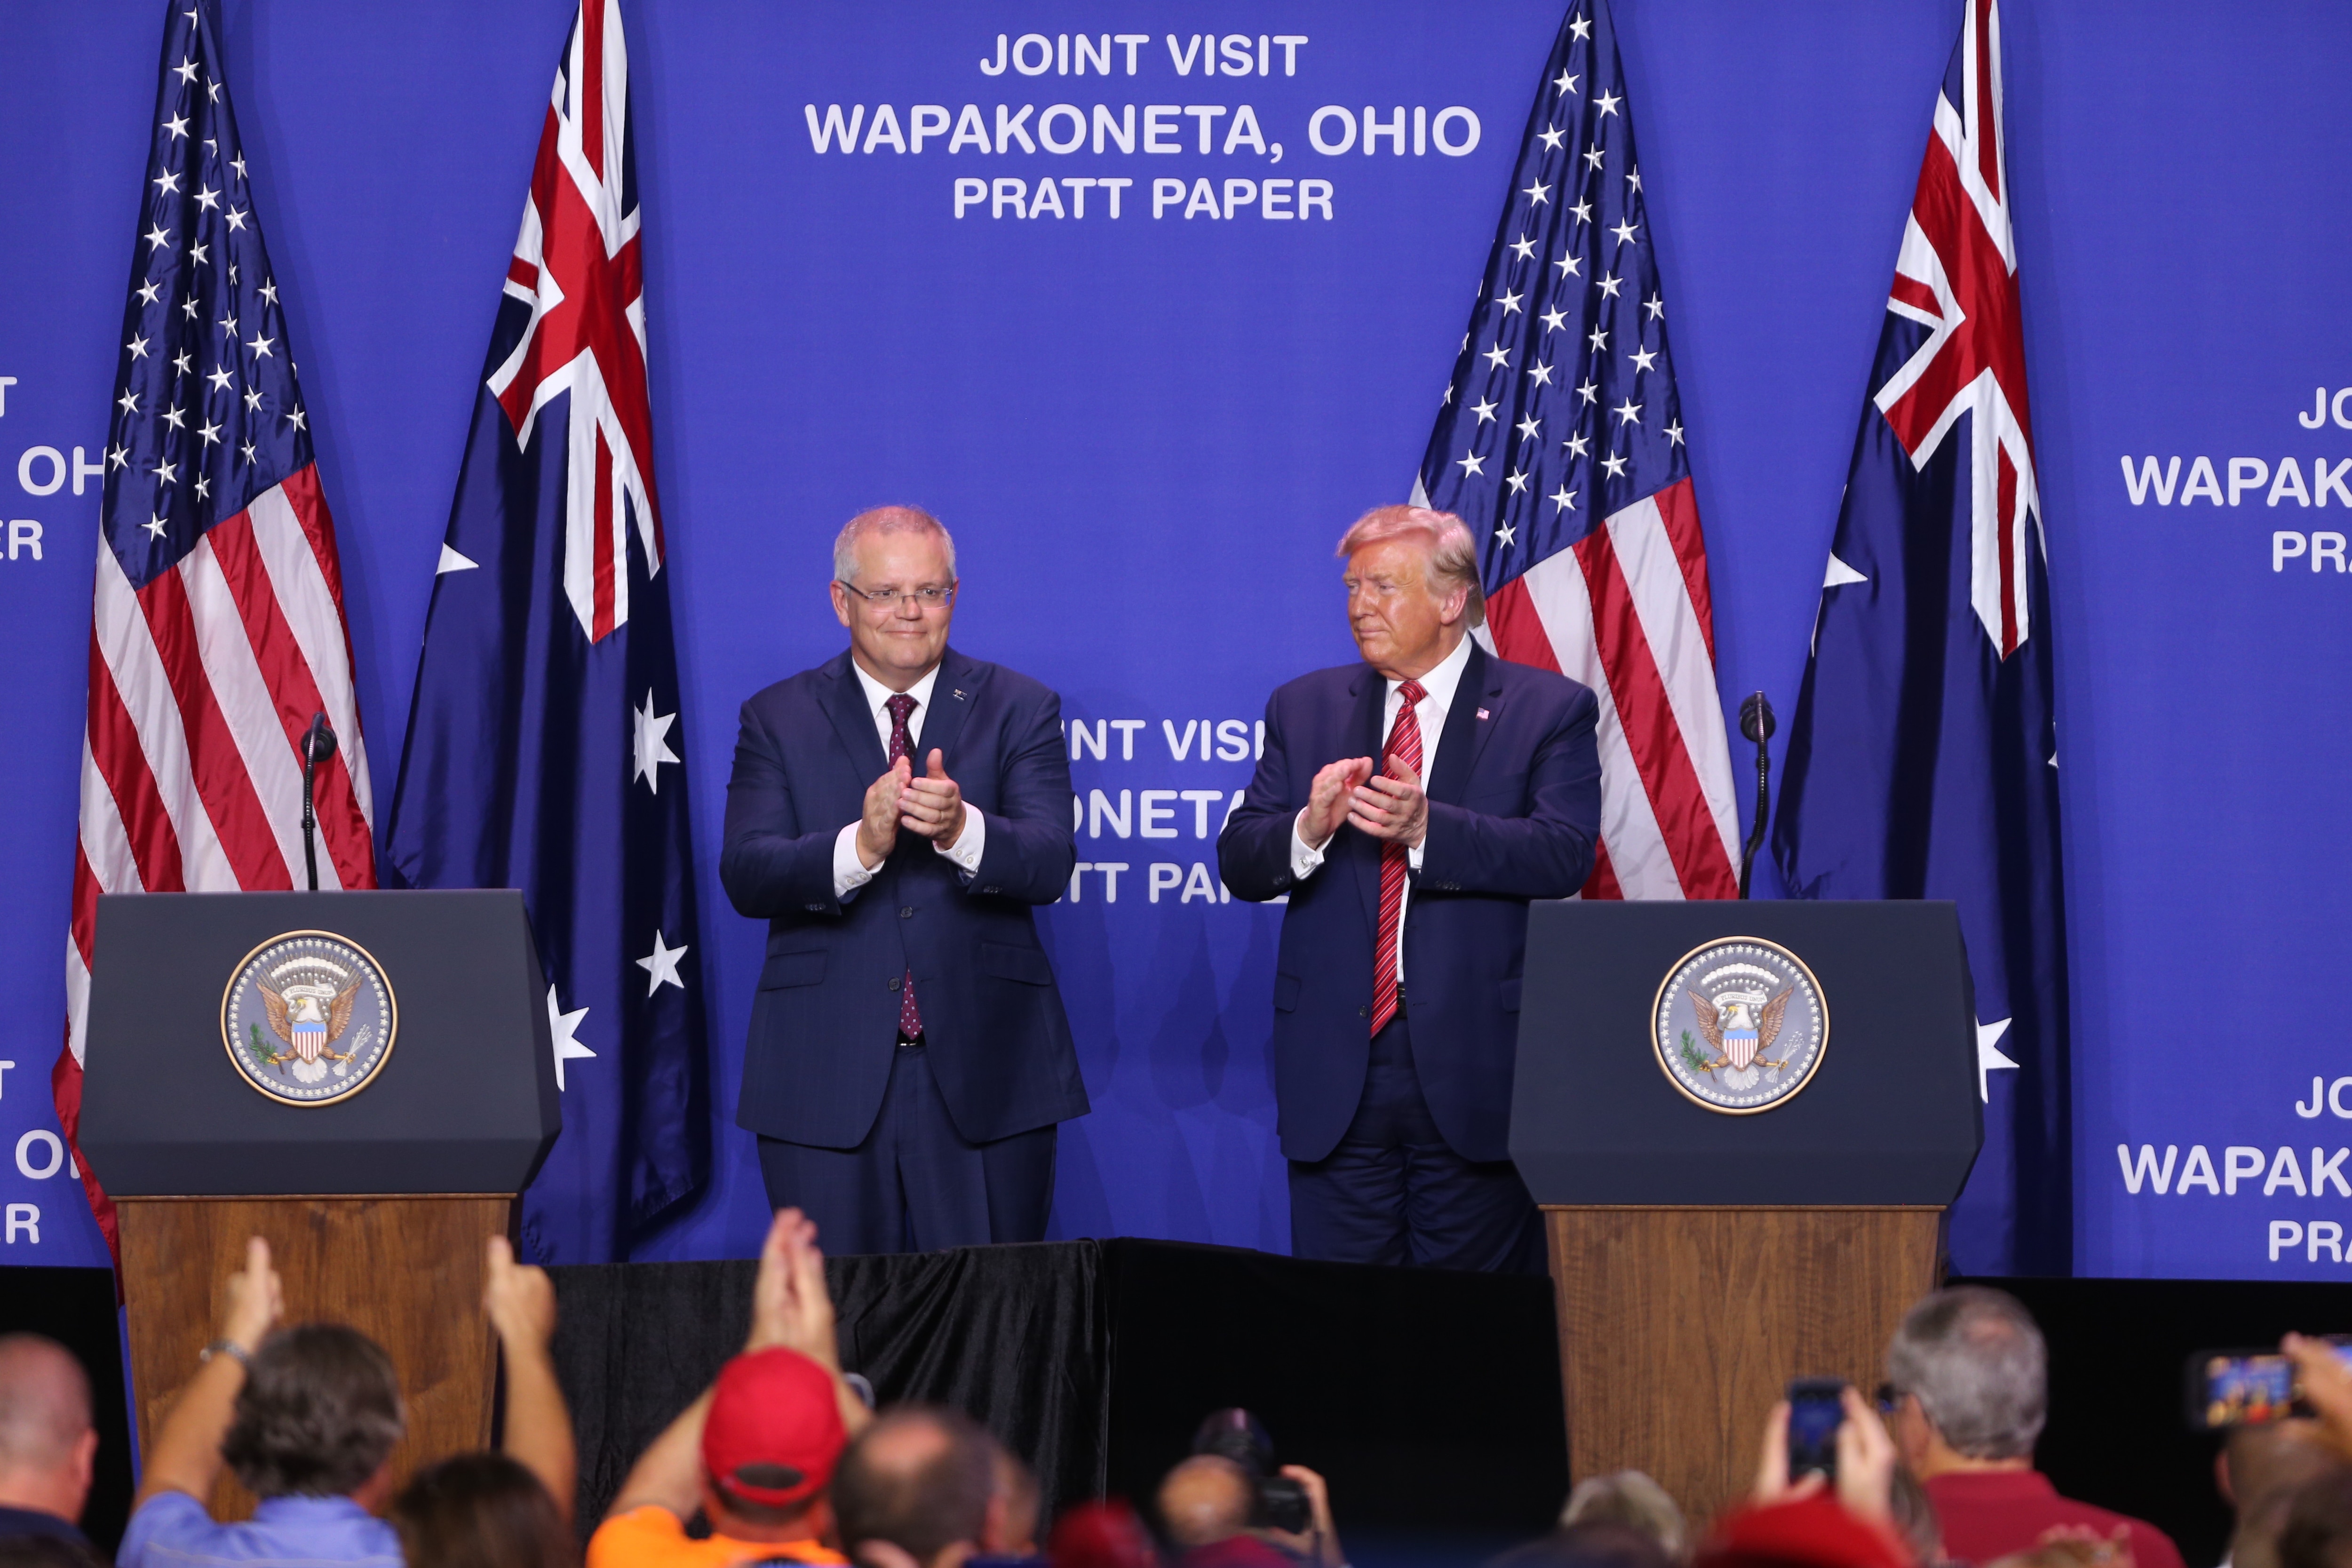 US President Donald J. Trump and Prime Minster Scott Morrison during a rally in Wapakoneta, Ohio.